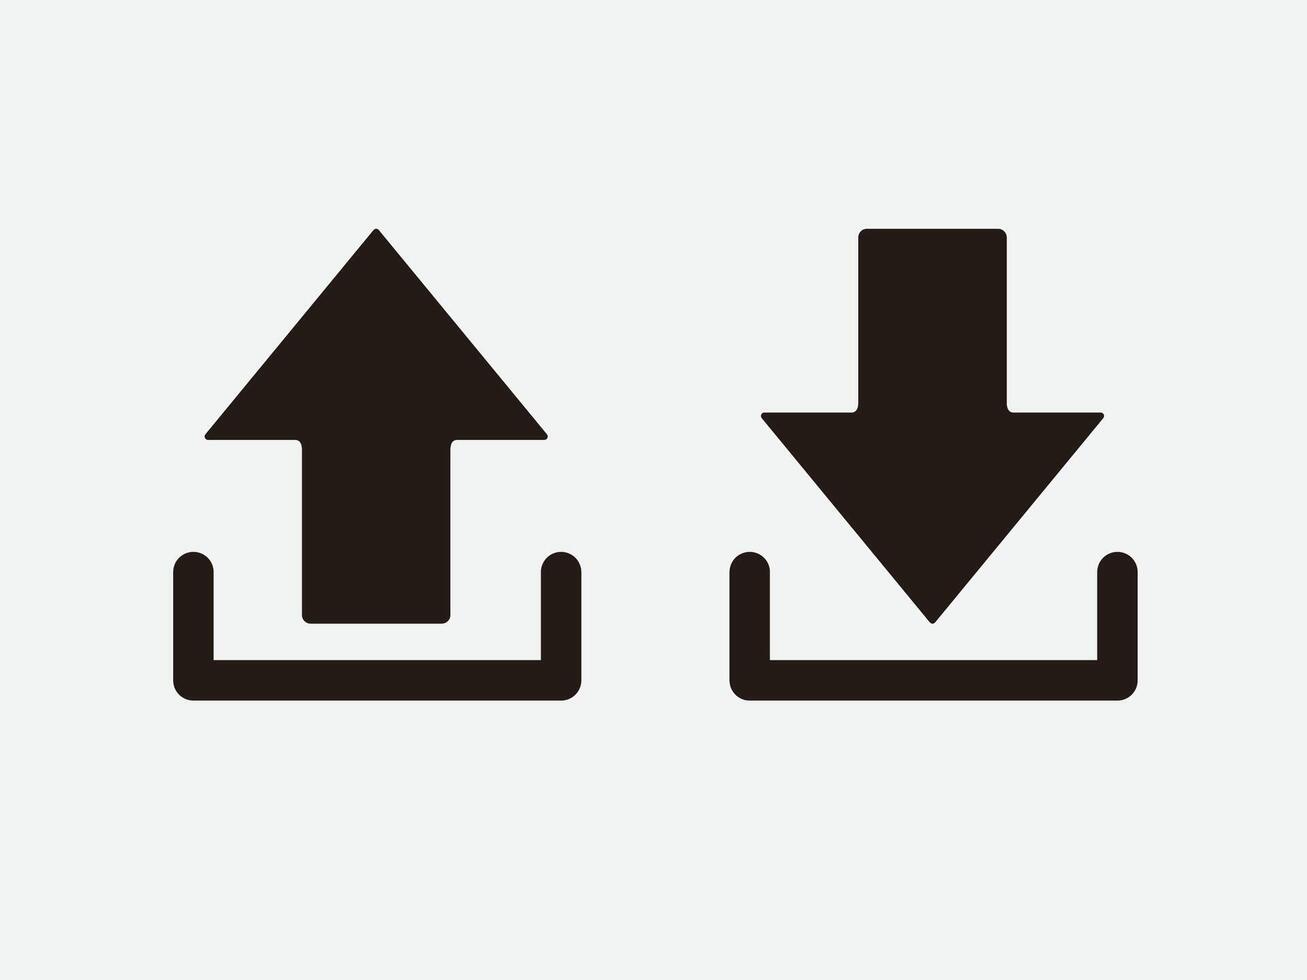 Download flat icon. install .download. Upload. Load symbol simple flat illustration vector